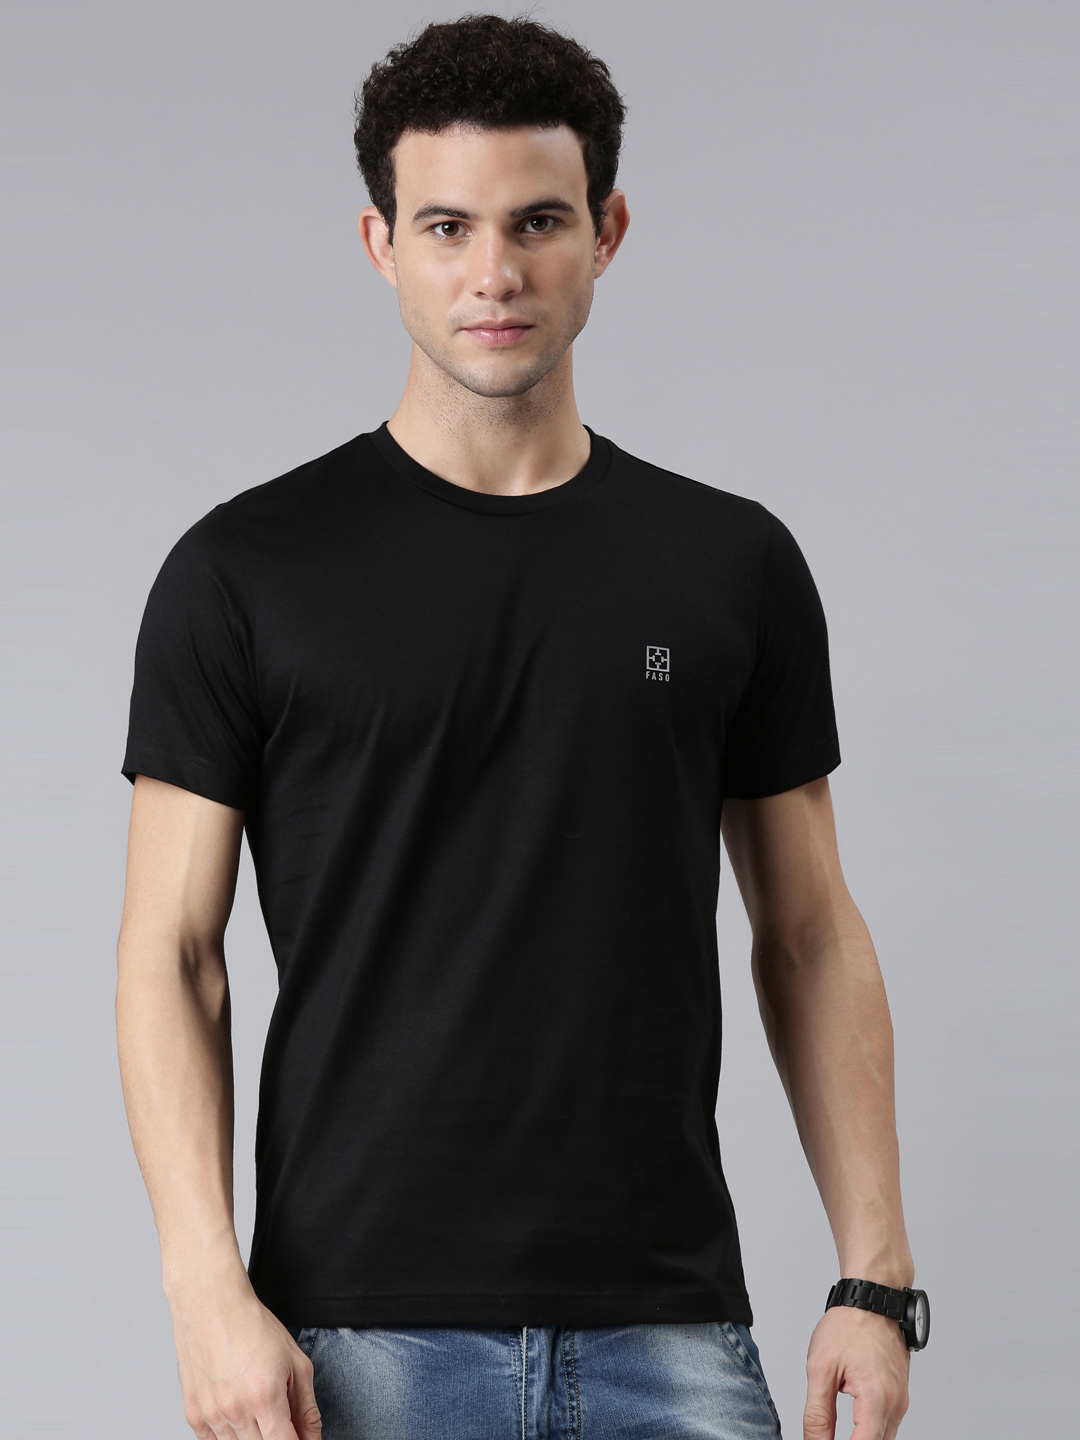 Buy Round Neck T Shirt at FASO | Shop Online at FASO